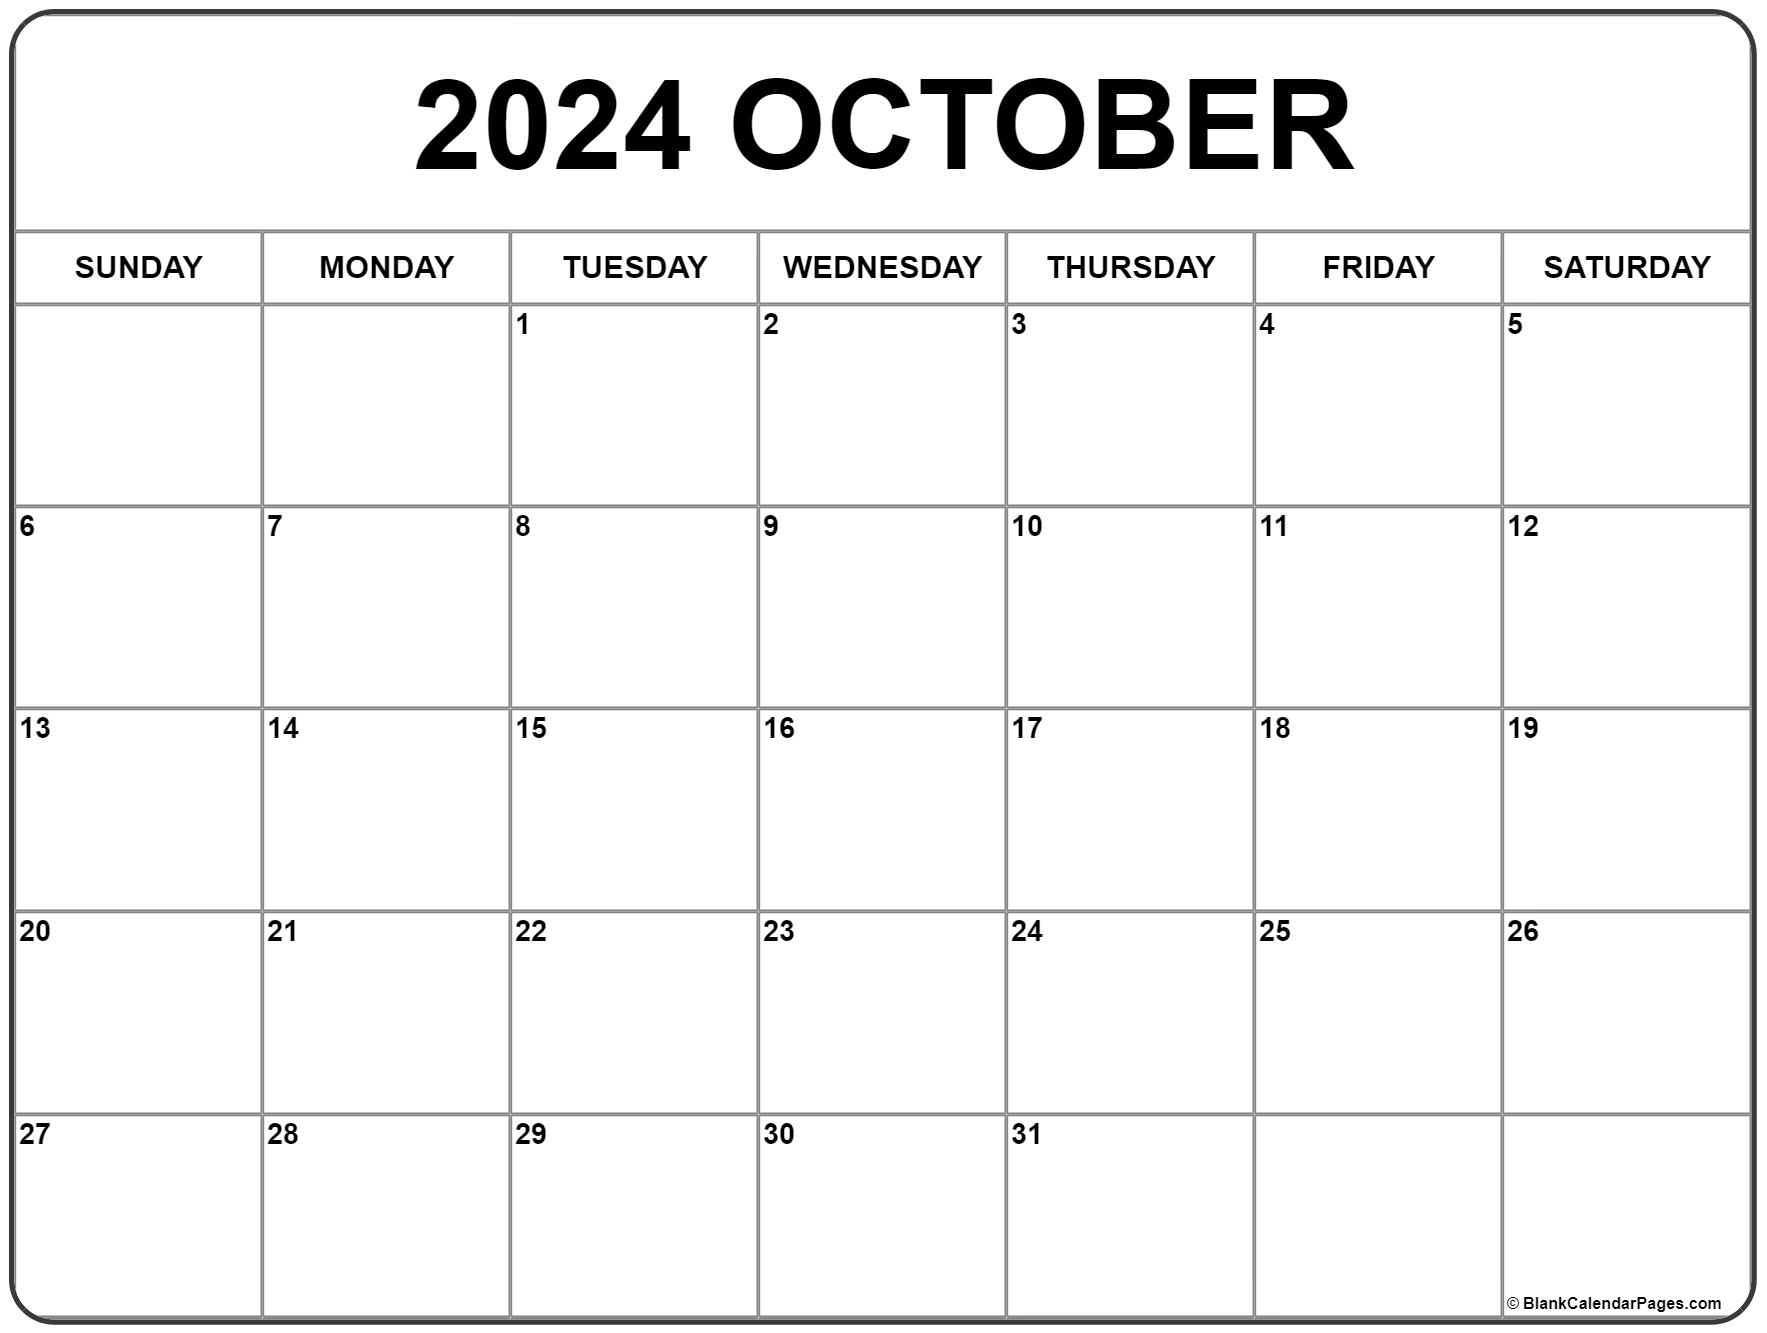 october-2020-calendar-56-templates-of-2020-printable-calendars